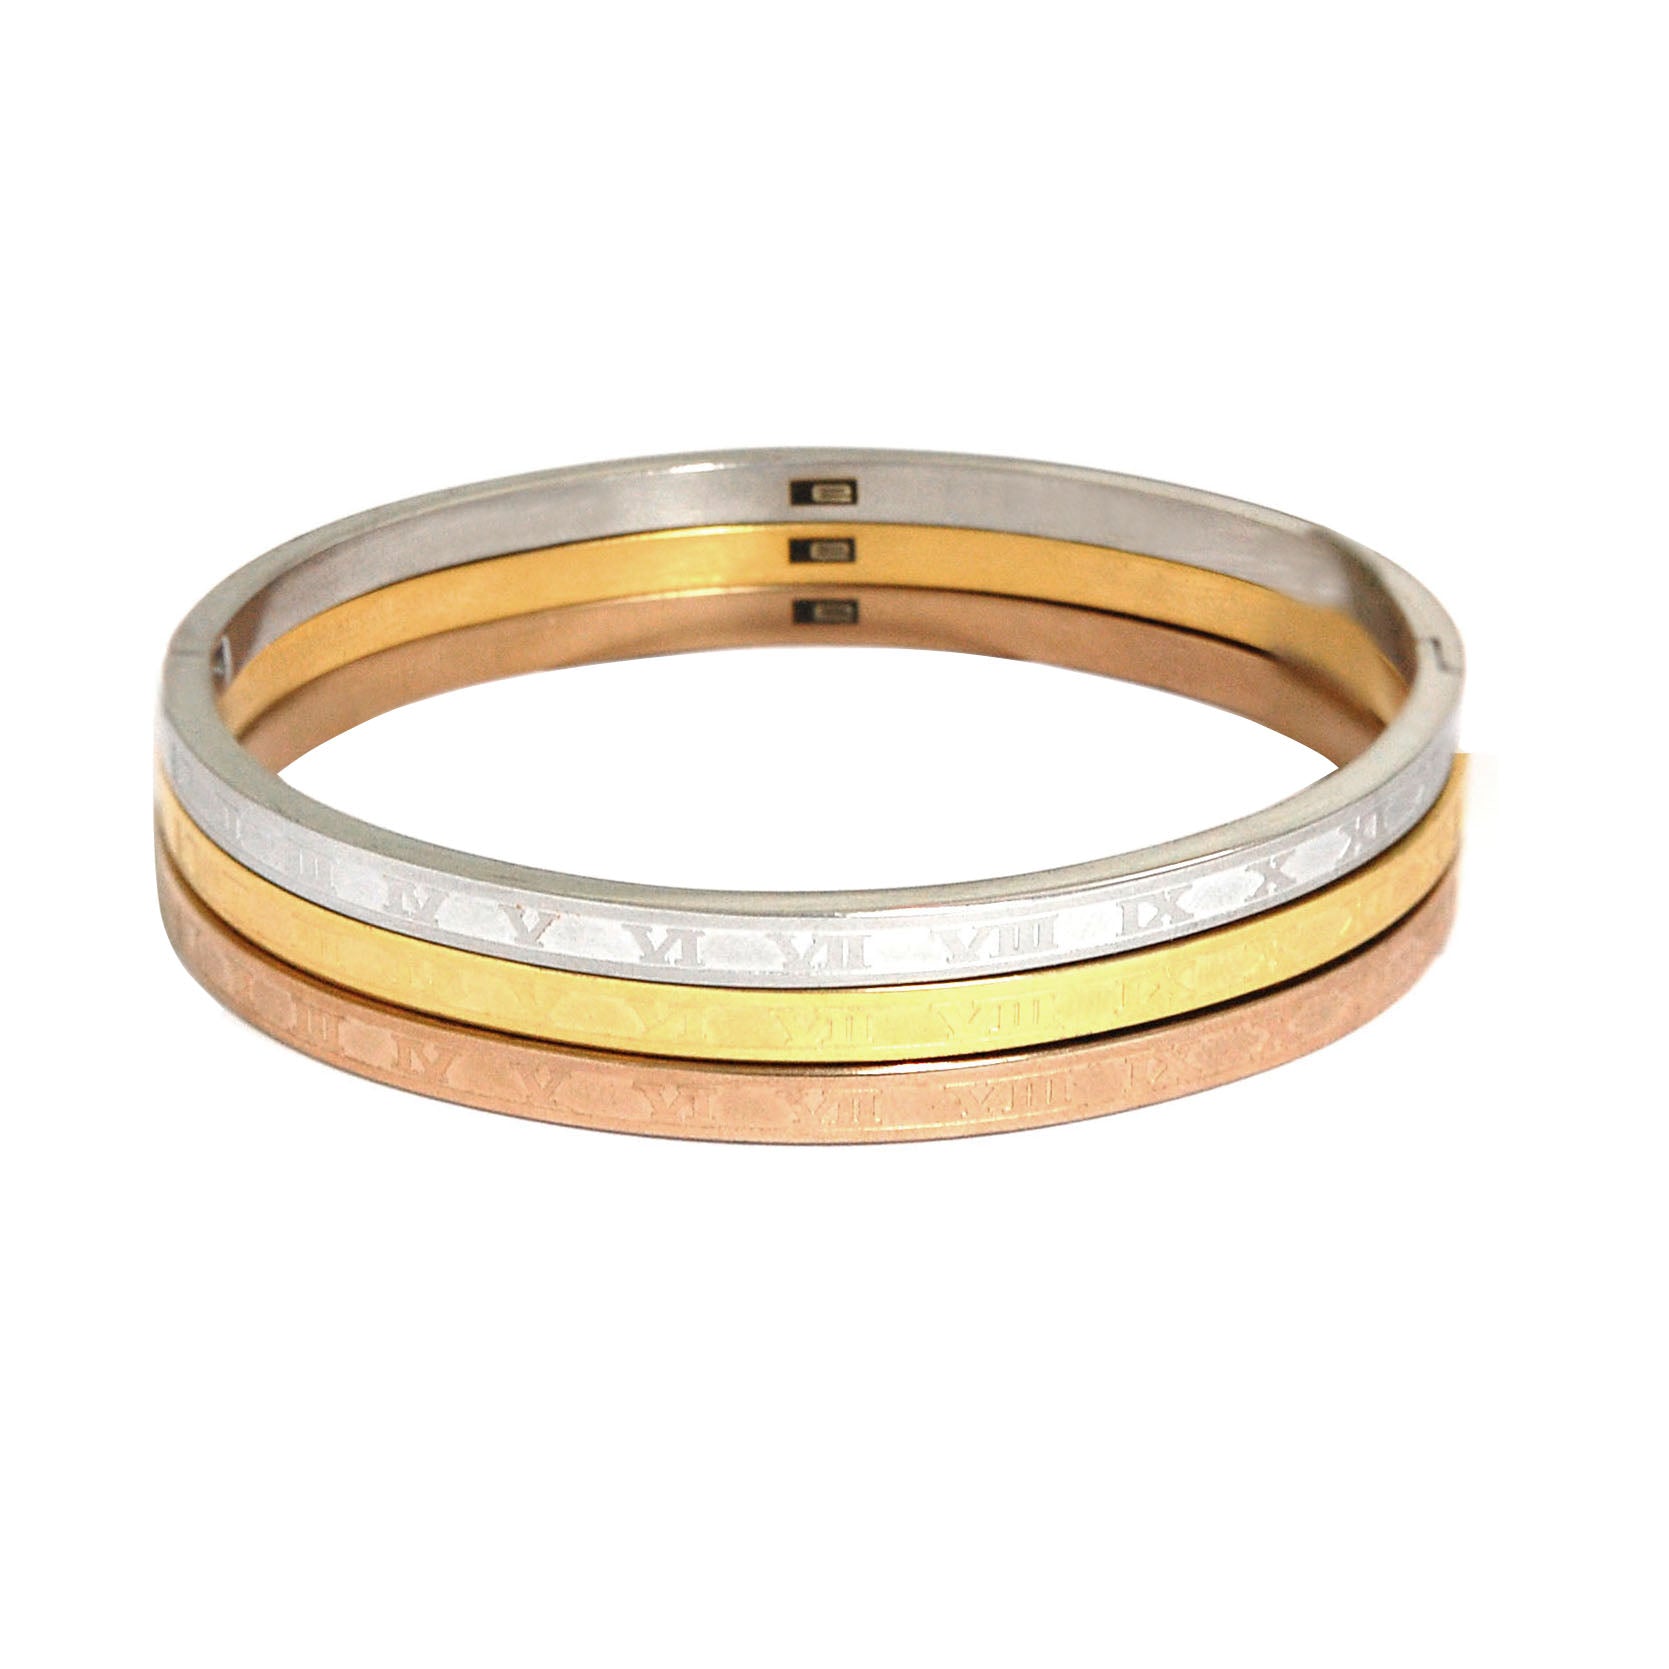 ESBG 6568: Set Of 3 Tri-Color Tiffany Numerals Bangles (White, Gold, Rose Gold)